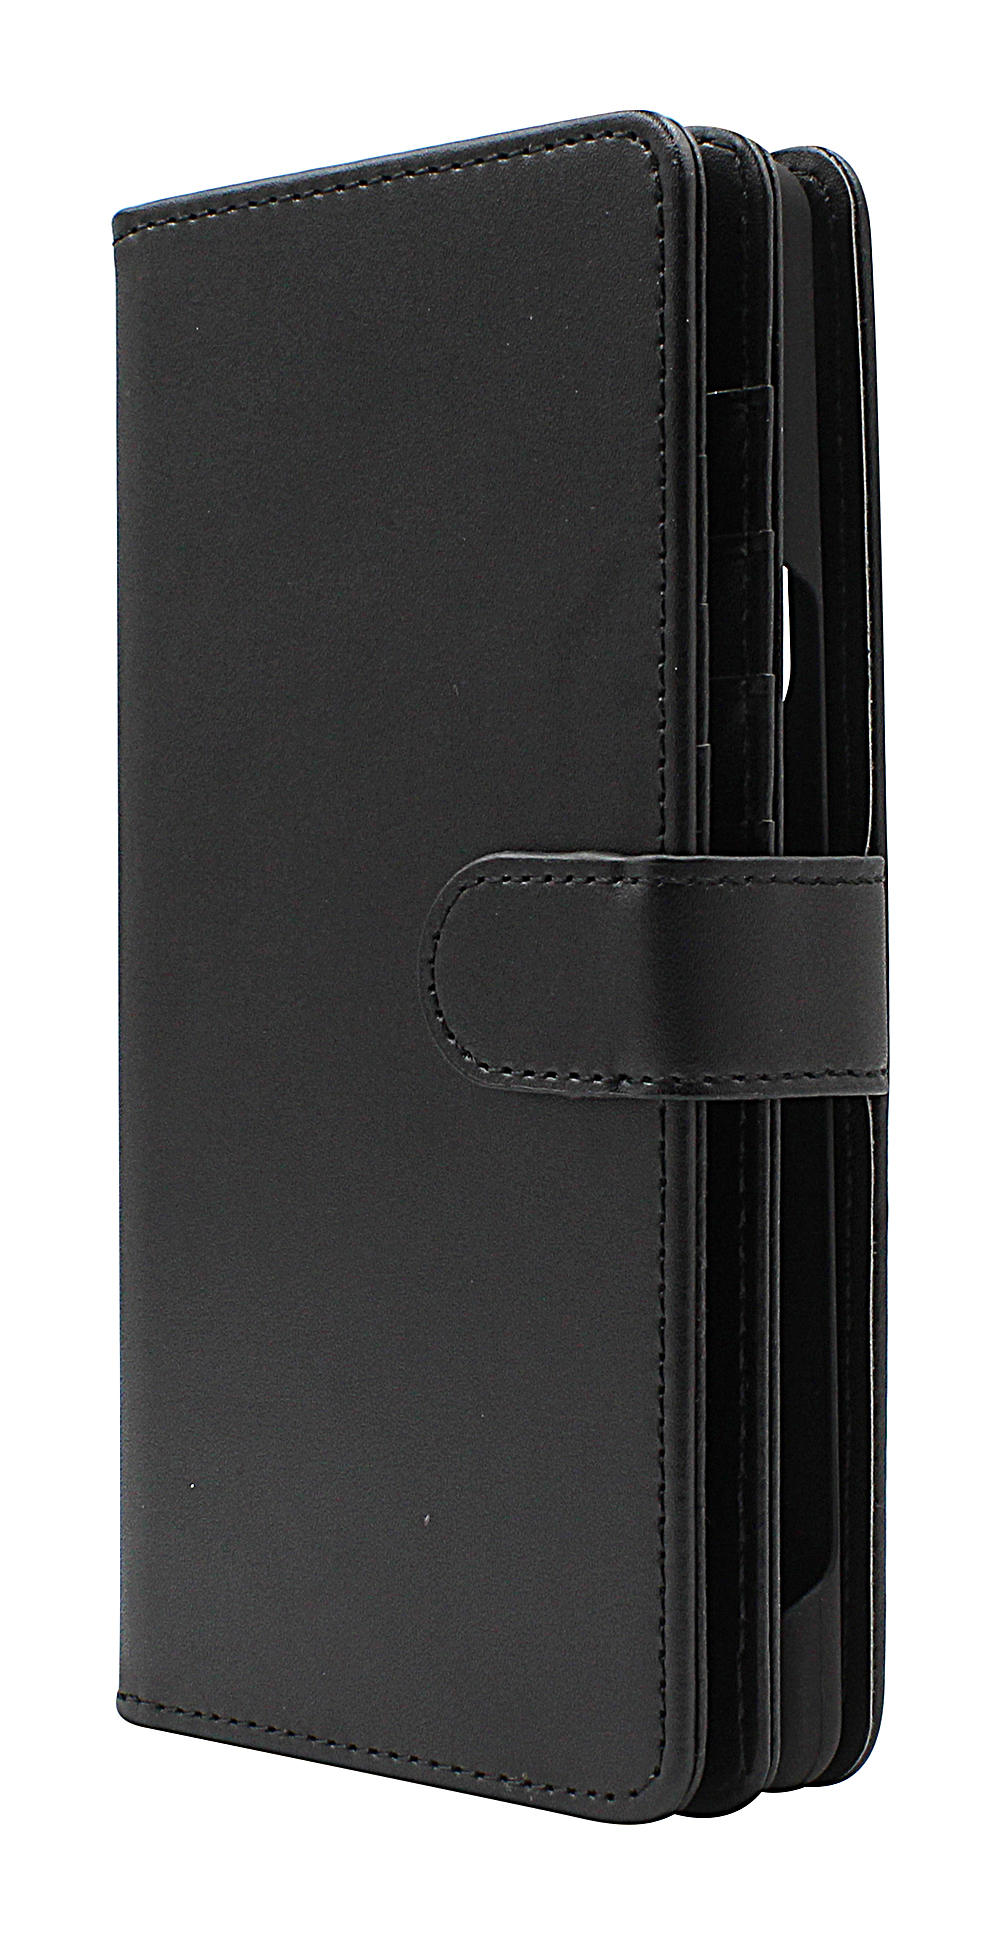 CoverIn Skimblocker XL Magnet Wallet Sony Xperia 1 IV (XQ-CT54)